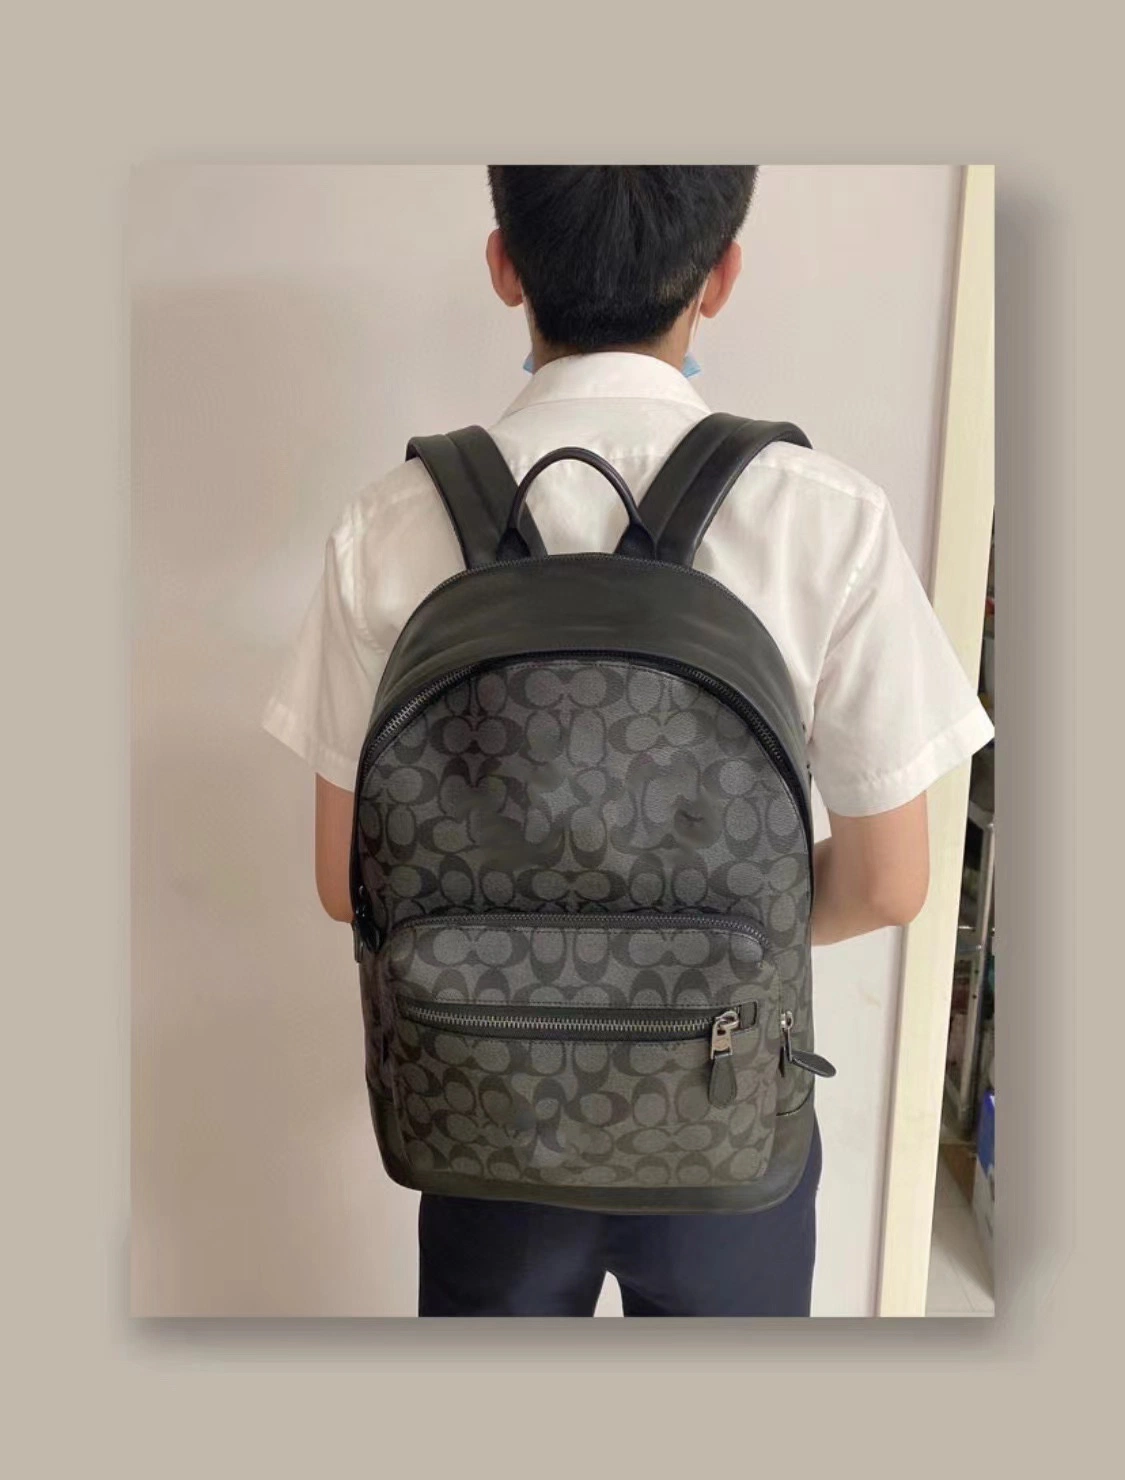 Wholesale/Supplier Luggage Best-Selling Brand Designer Luxury Backpacks Suppliers in China Luxury Backpack Sales